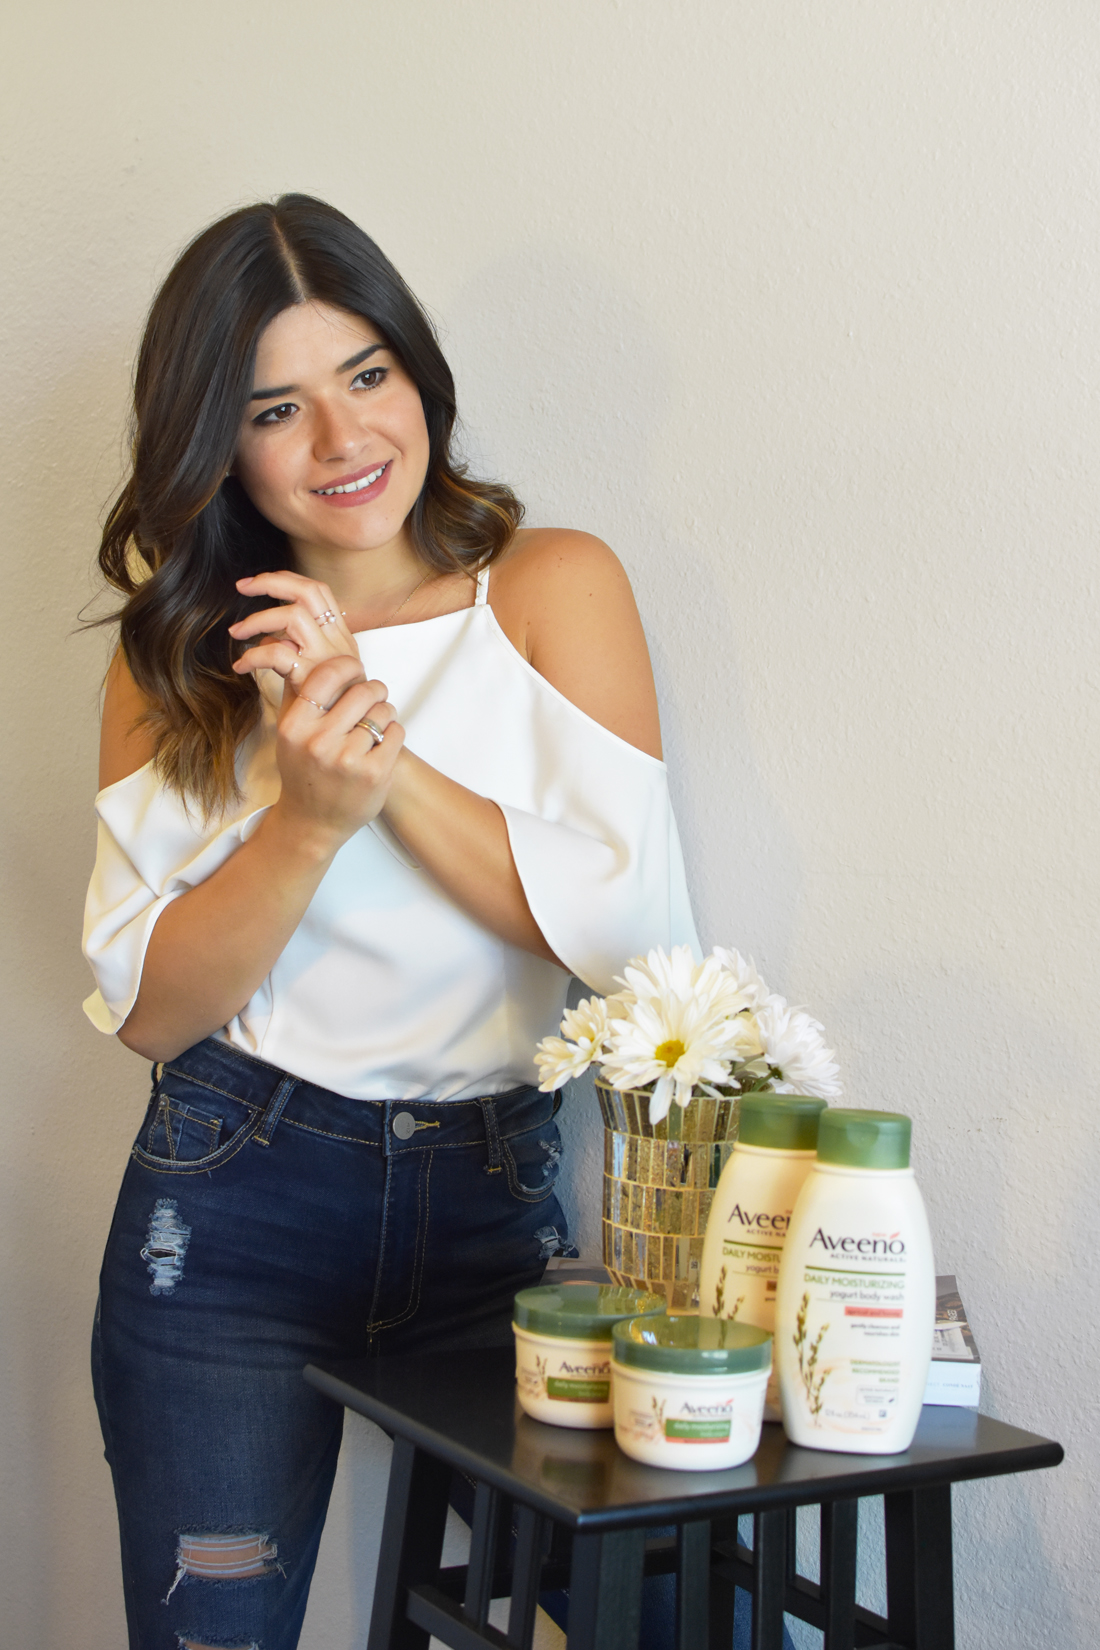 Carolina Hellal wearing the new Aveeno yugurt lotion and body wash - AVEENO YOGURT BODY WASH & LOTION by popular Denver style blogger Chic Talk